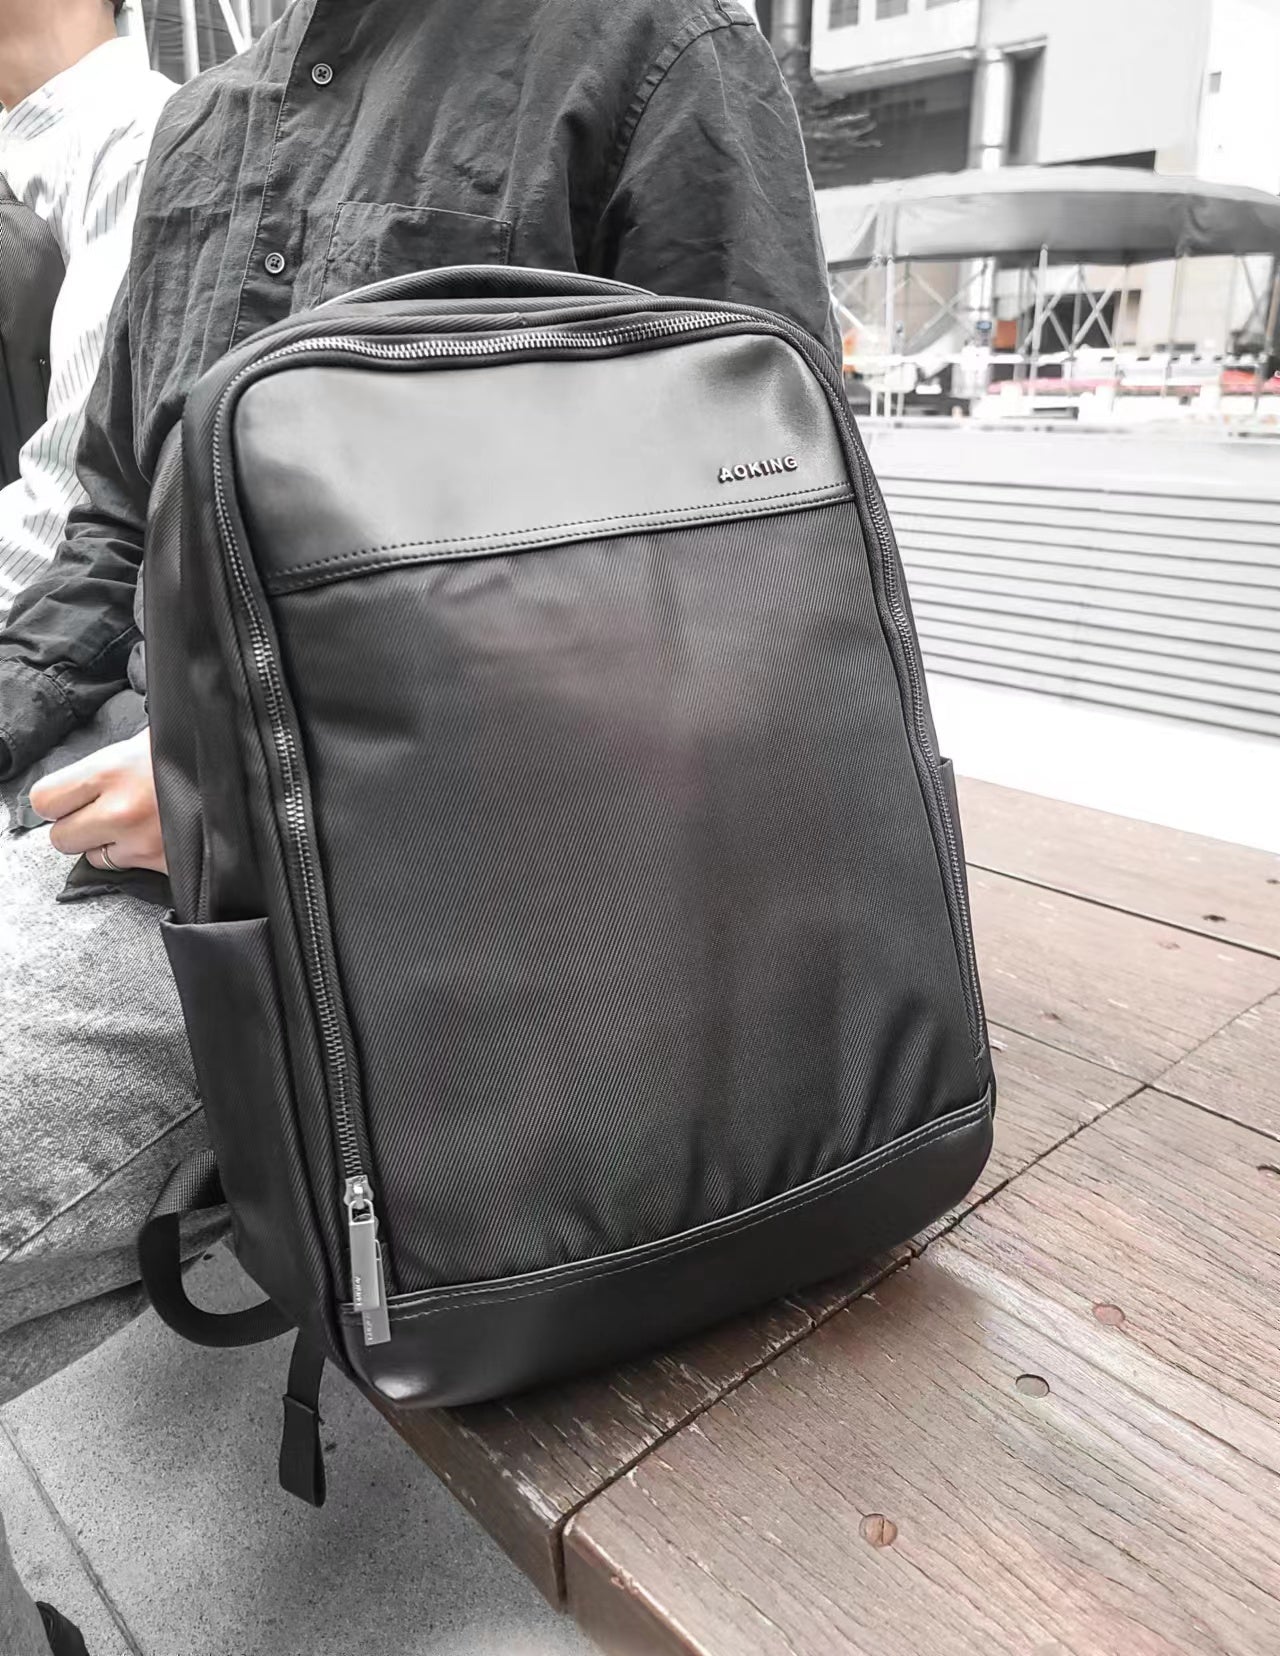 Aoking Business Laptop Backpack SN2120 Black